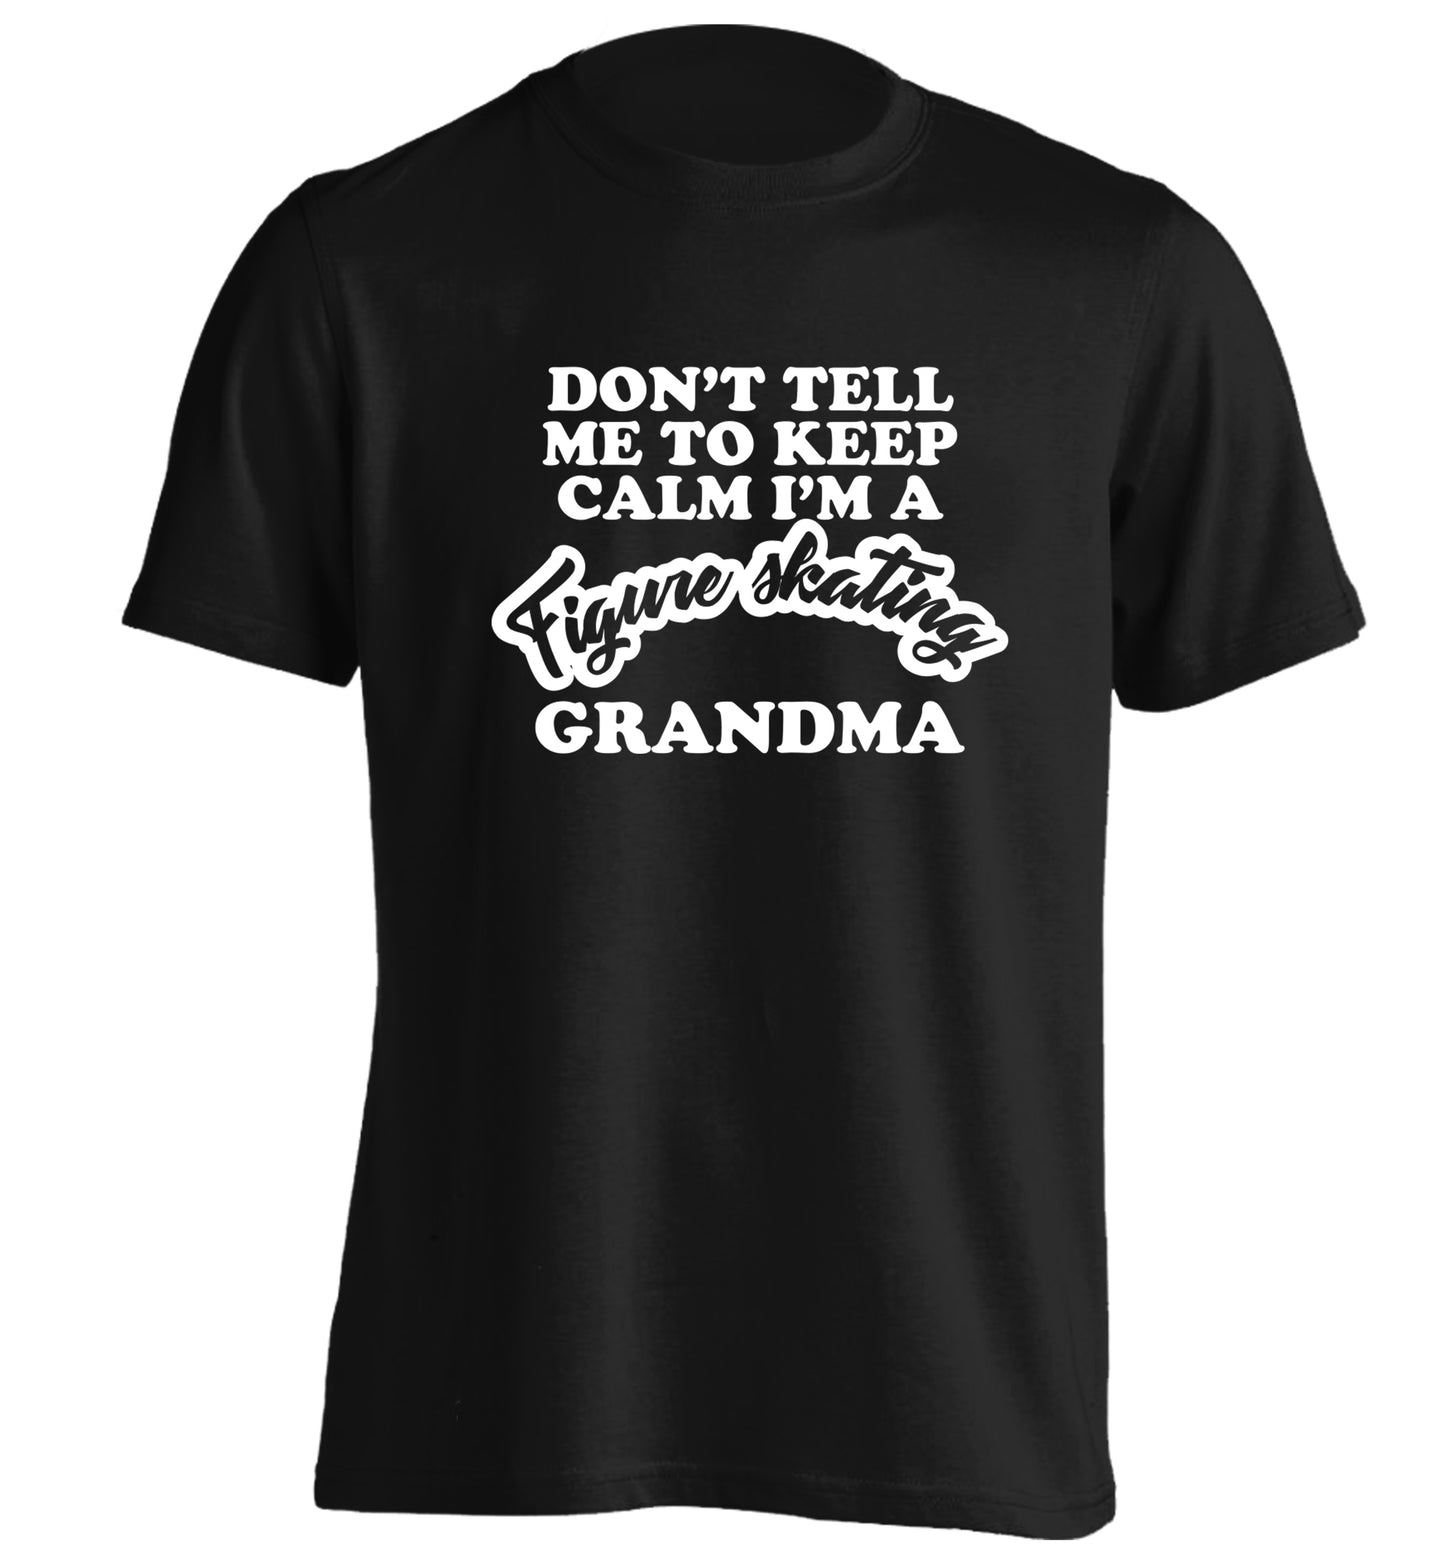 Don't tell me to keep calm I'm a figure skating grandma adults unisexblack Tshirt 2XL